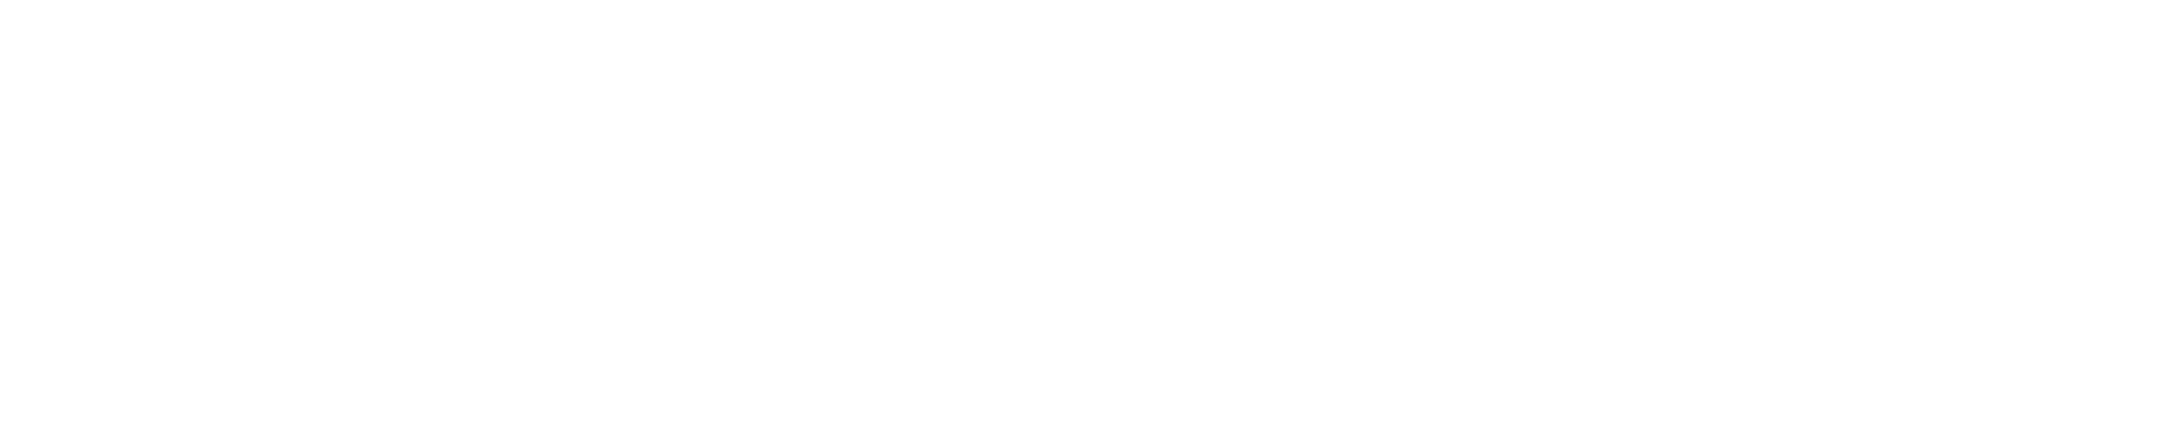 Envision blockchain logo